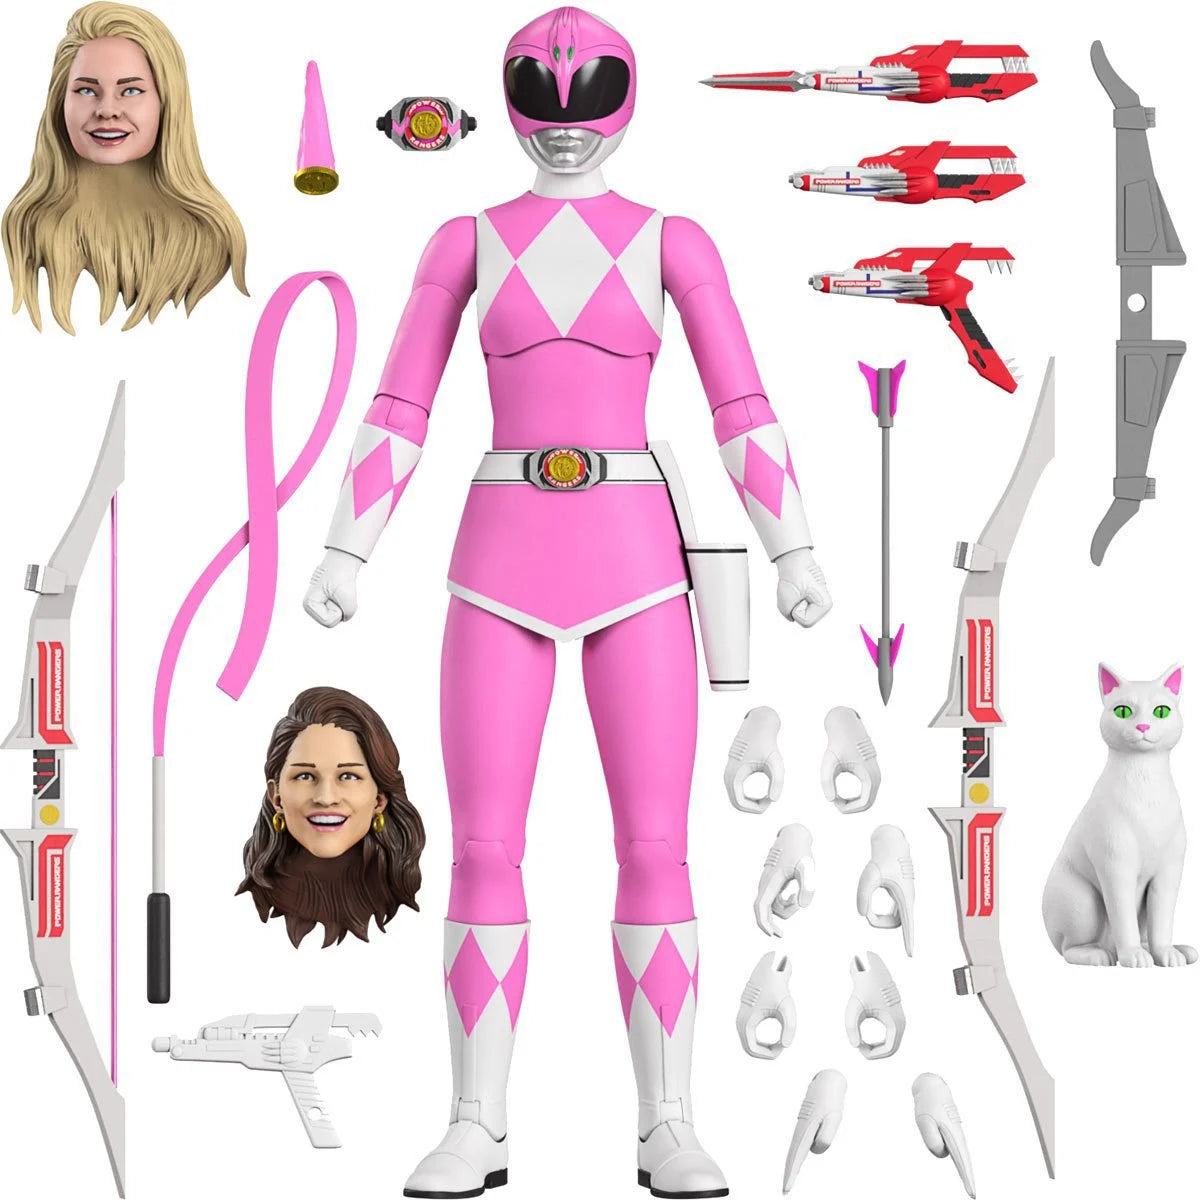 Power Rangers Ultimates Mighty Morphin Pink Ranger precio final $1,250 apartas con $250